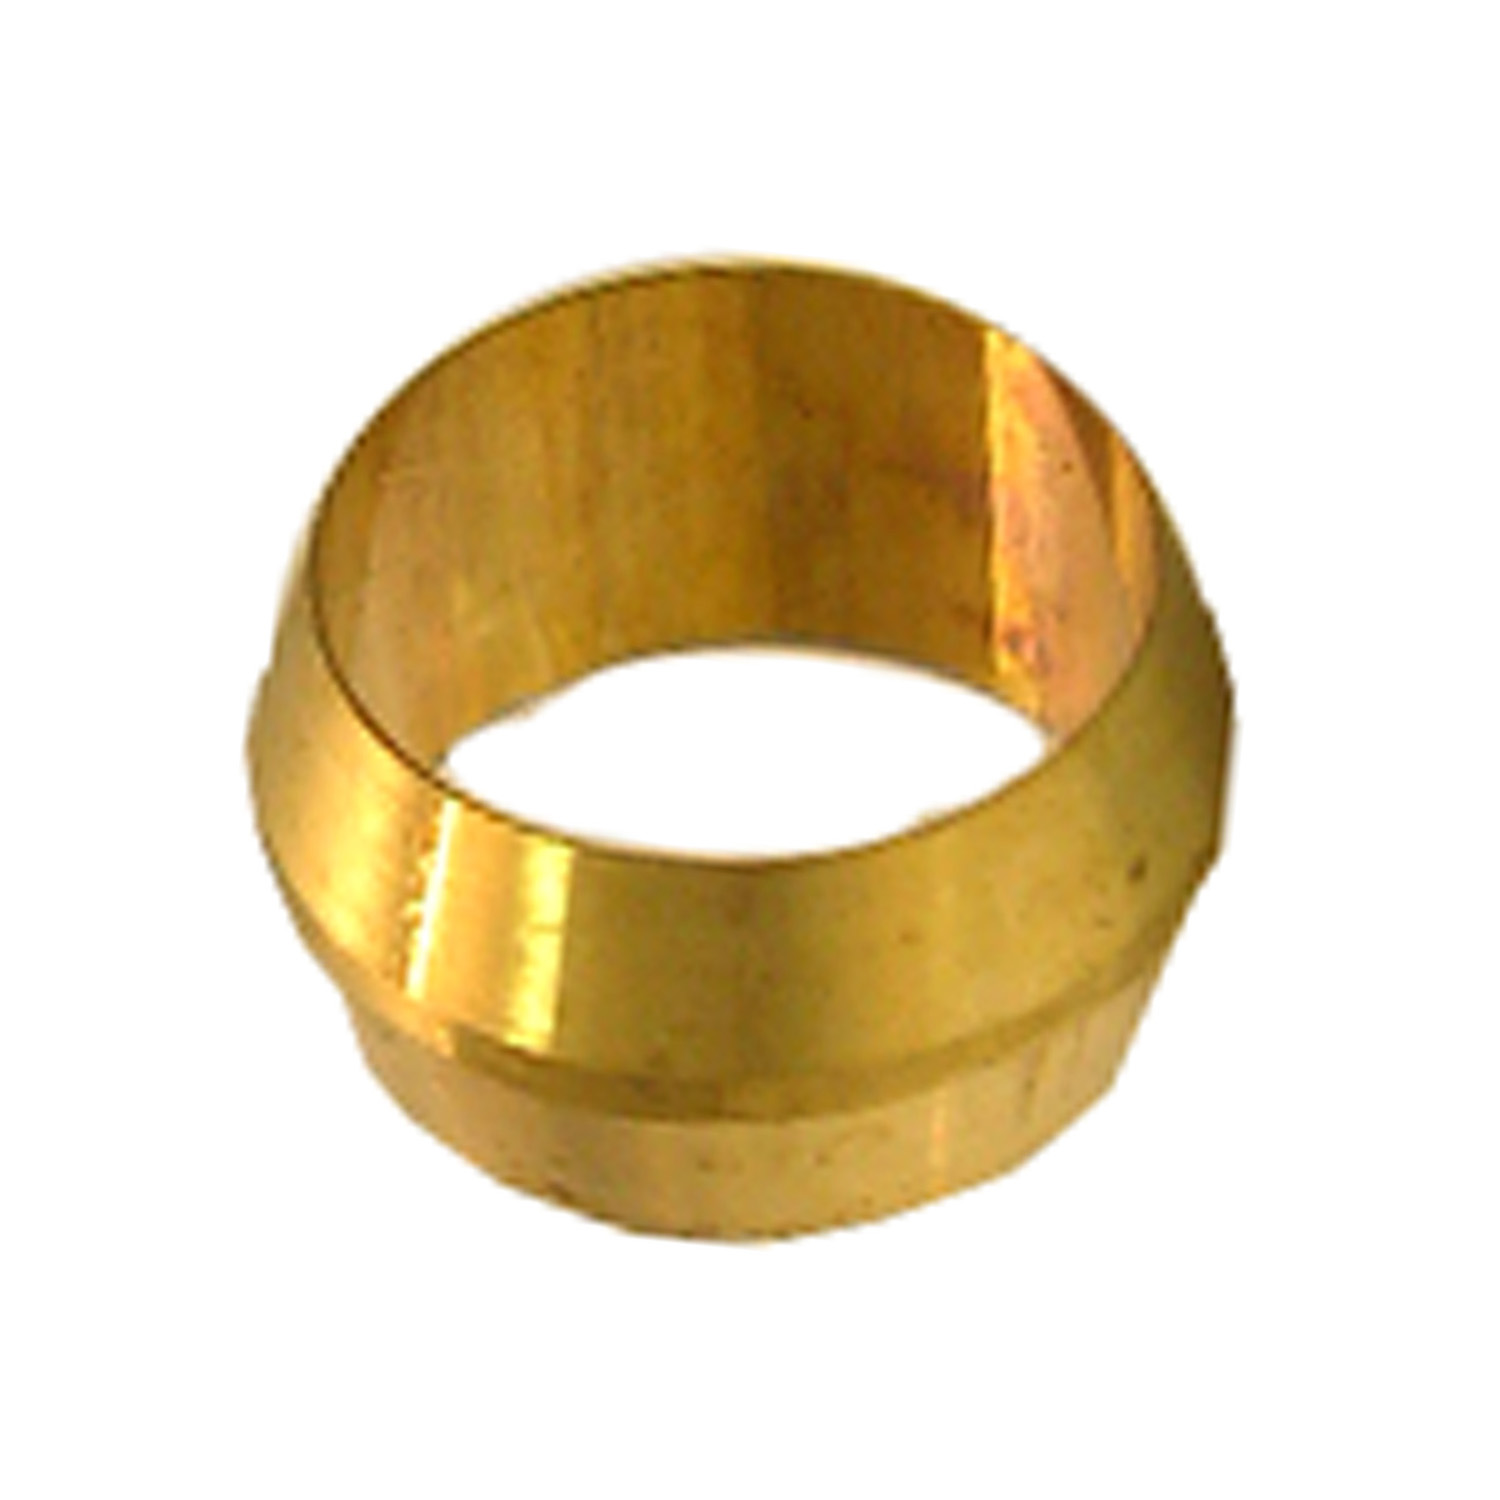 Lasco 17-6001 Pipe Sleeve, 1/8 in Compression, Brass, 2/PK